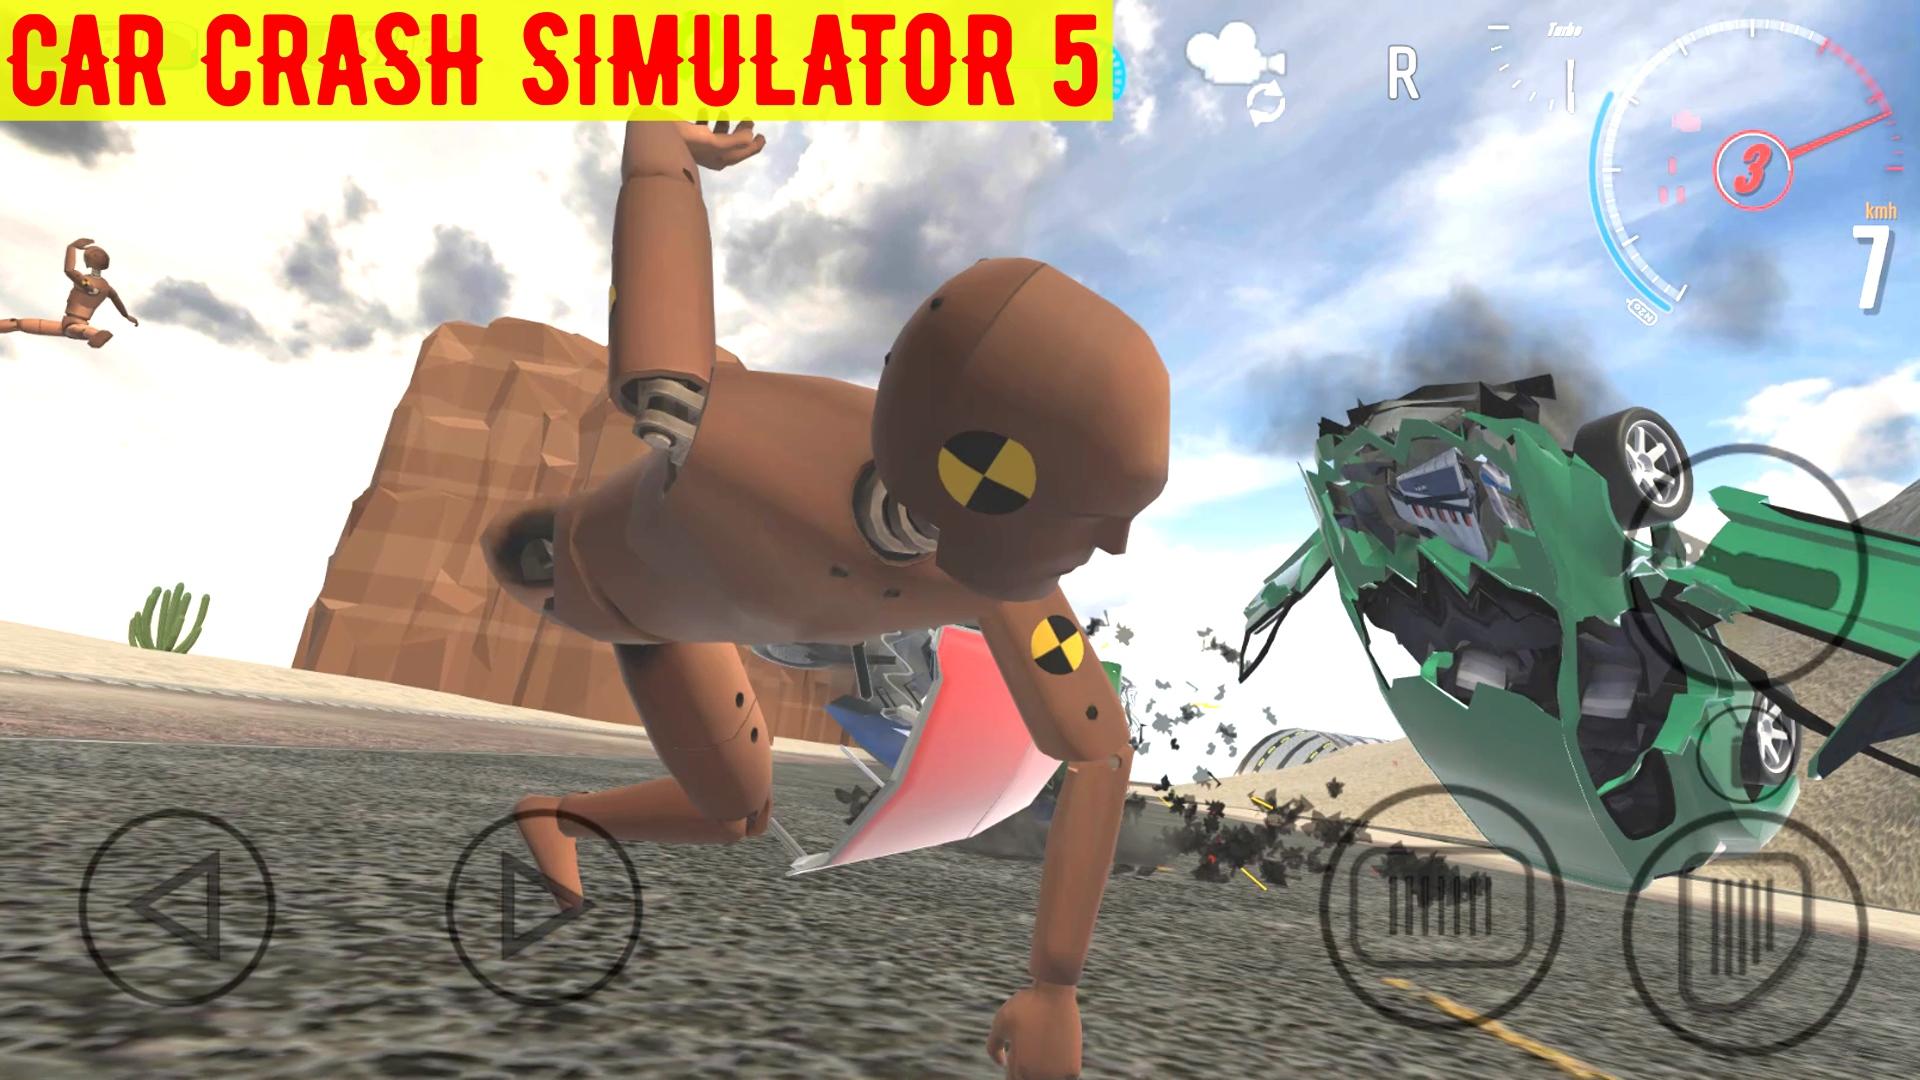 Screenshot 1 of ကားပျက်ခြင်း Simulator ၅ 5